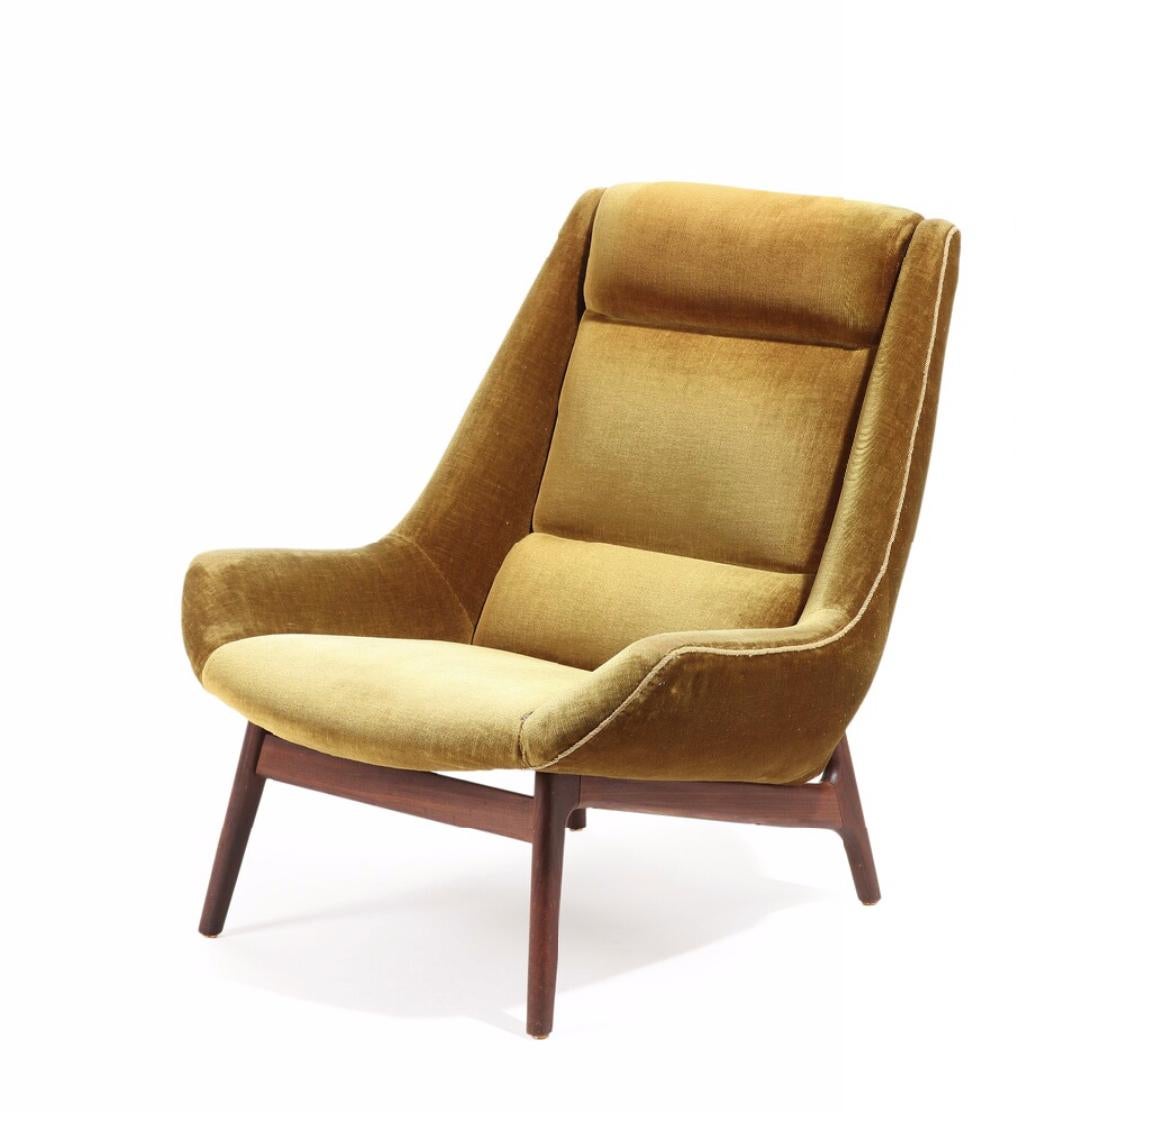 Mid-Century Modern Danish Furniture Design : Velour Easy Chair